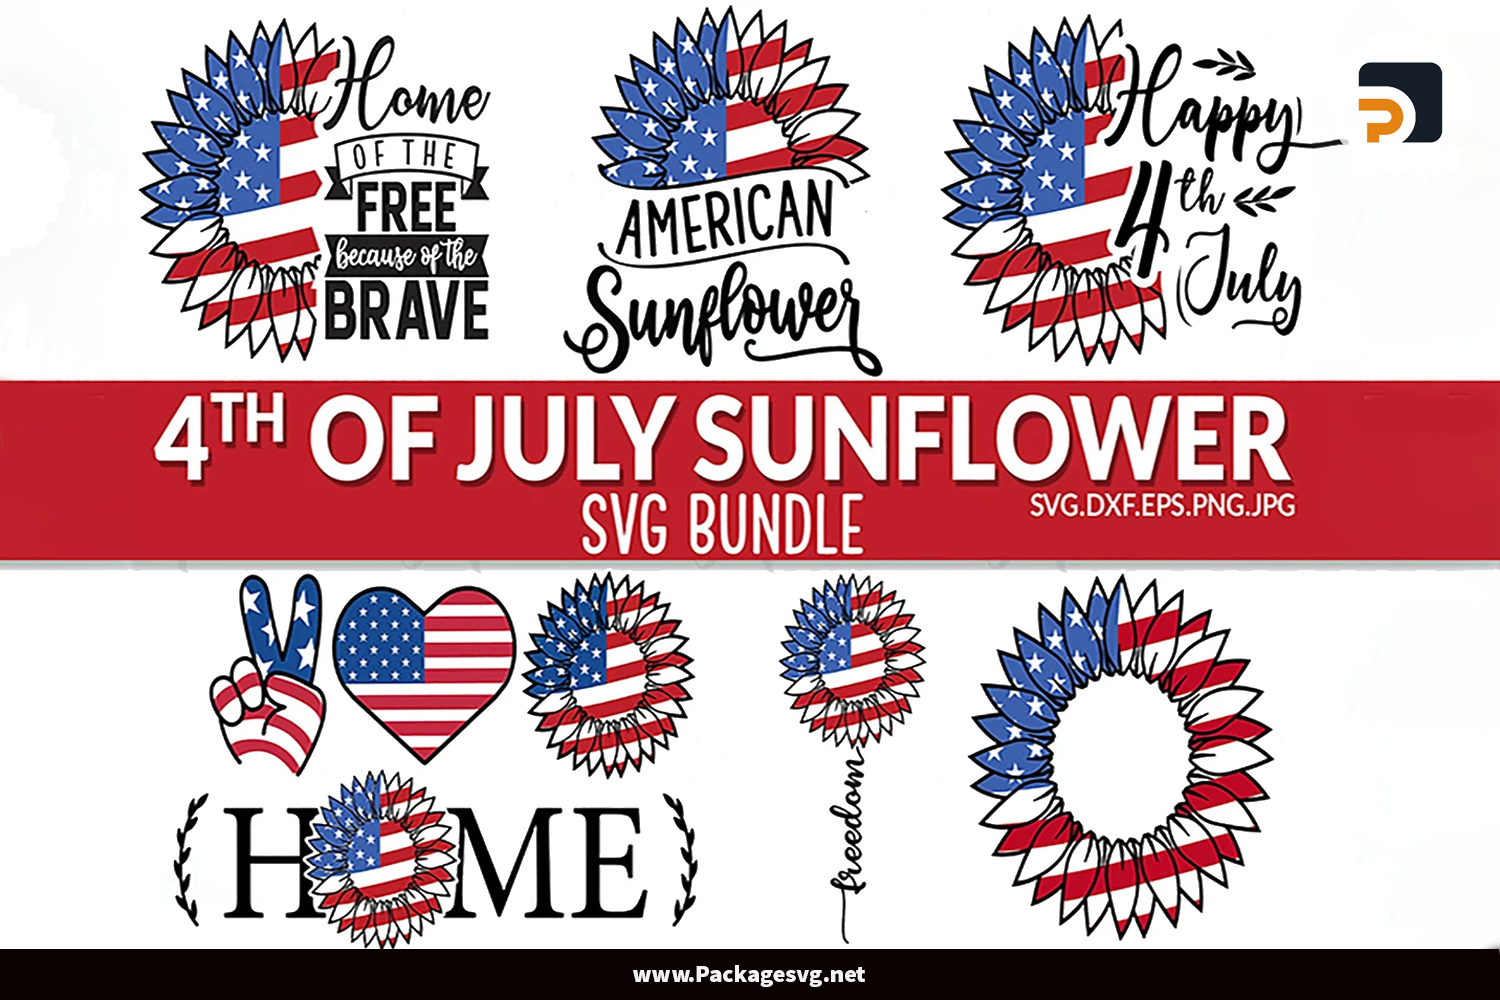 4th of July Sunflower SVG Bundle